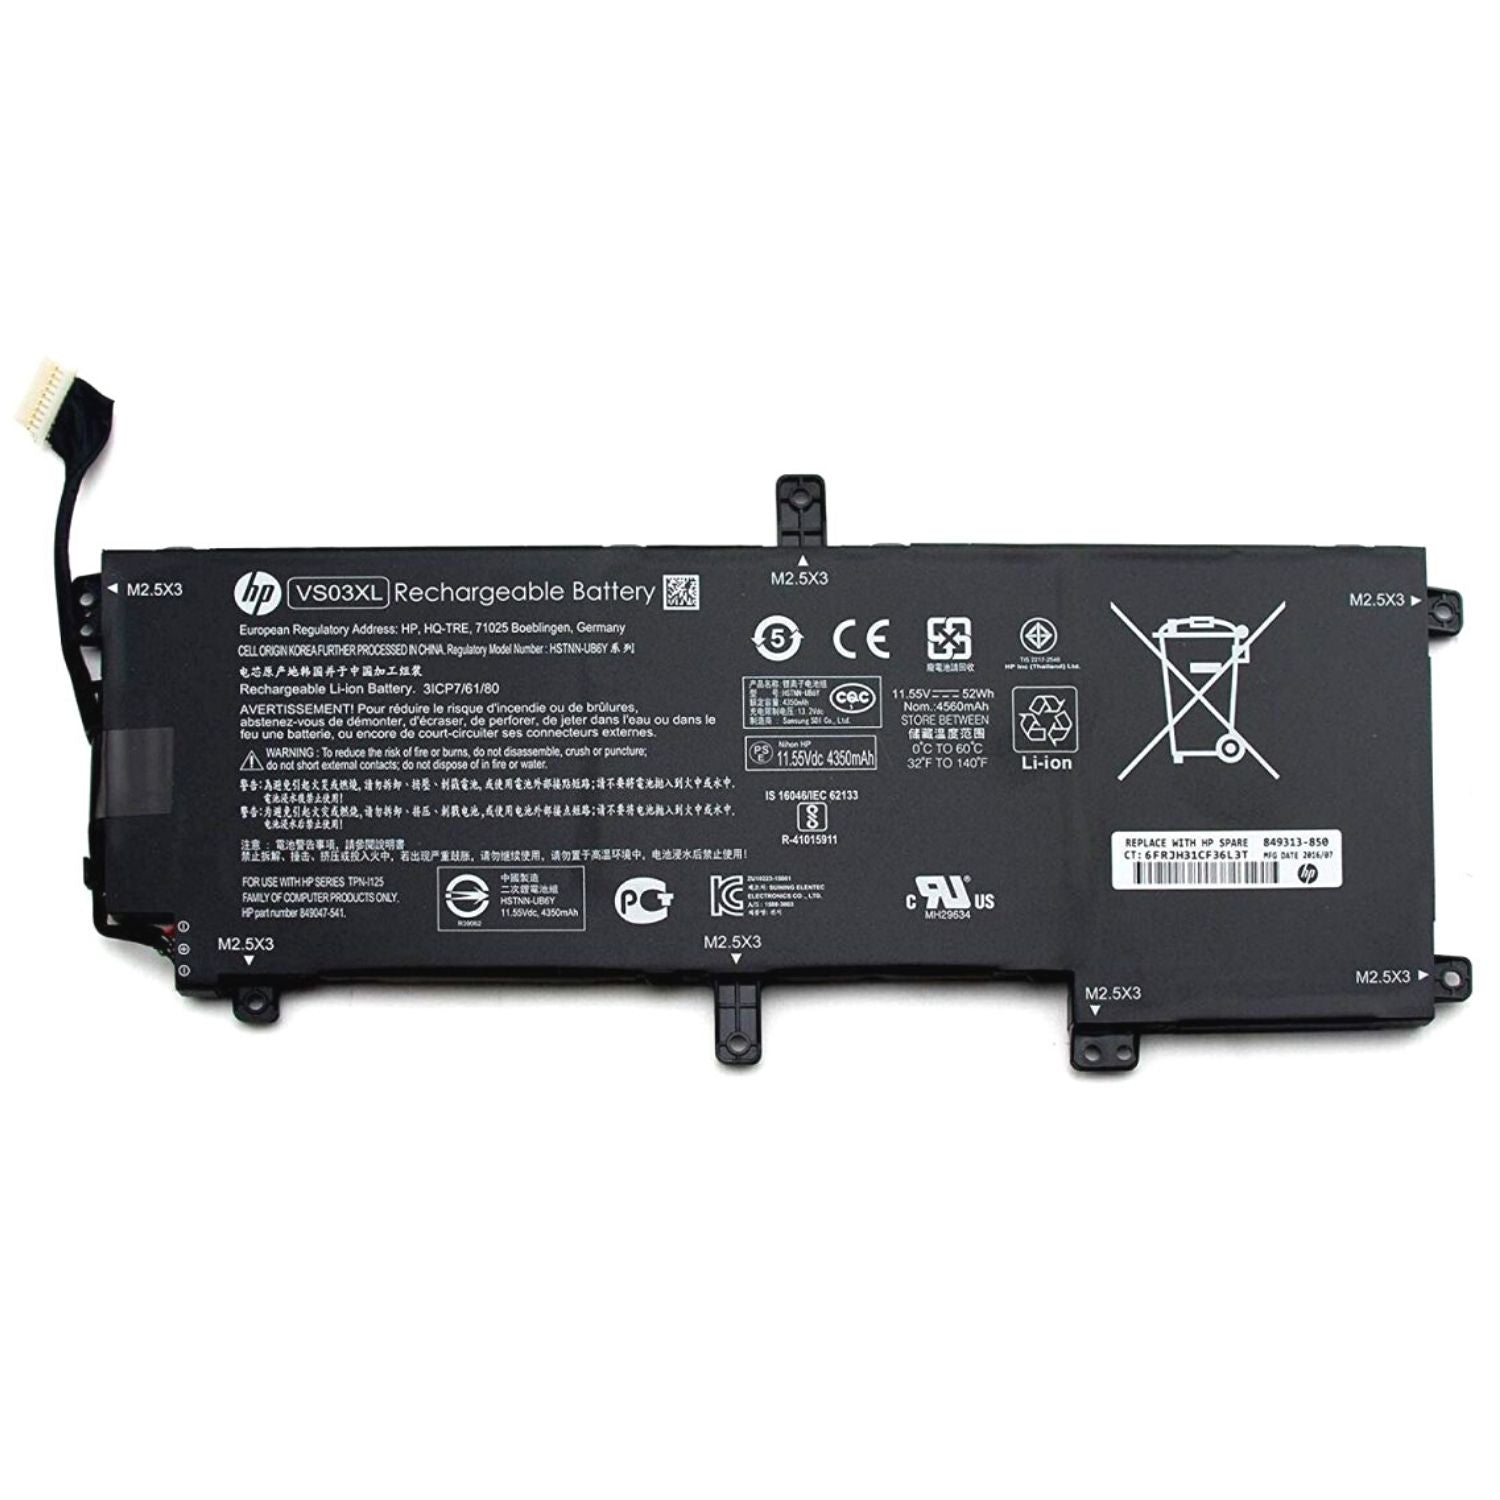 HP VS03XL Original Battery for HP Envy 15T-AS000 15T-AS100 15T-AS100 CTO 15-AS 15-AS133CL X6V56UA 15-AS020NR 15-AS152NR 15-AS043CL 15-AS002LA 15-AS004LA 15-AS014WM HSTNN-UB6Y 849047-541 849313-850 3ICP7/61/80 Laptop Serie's